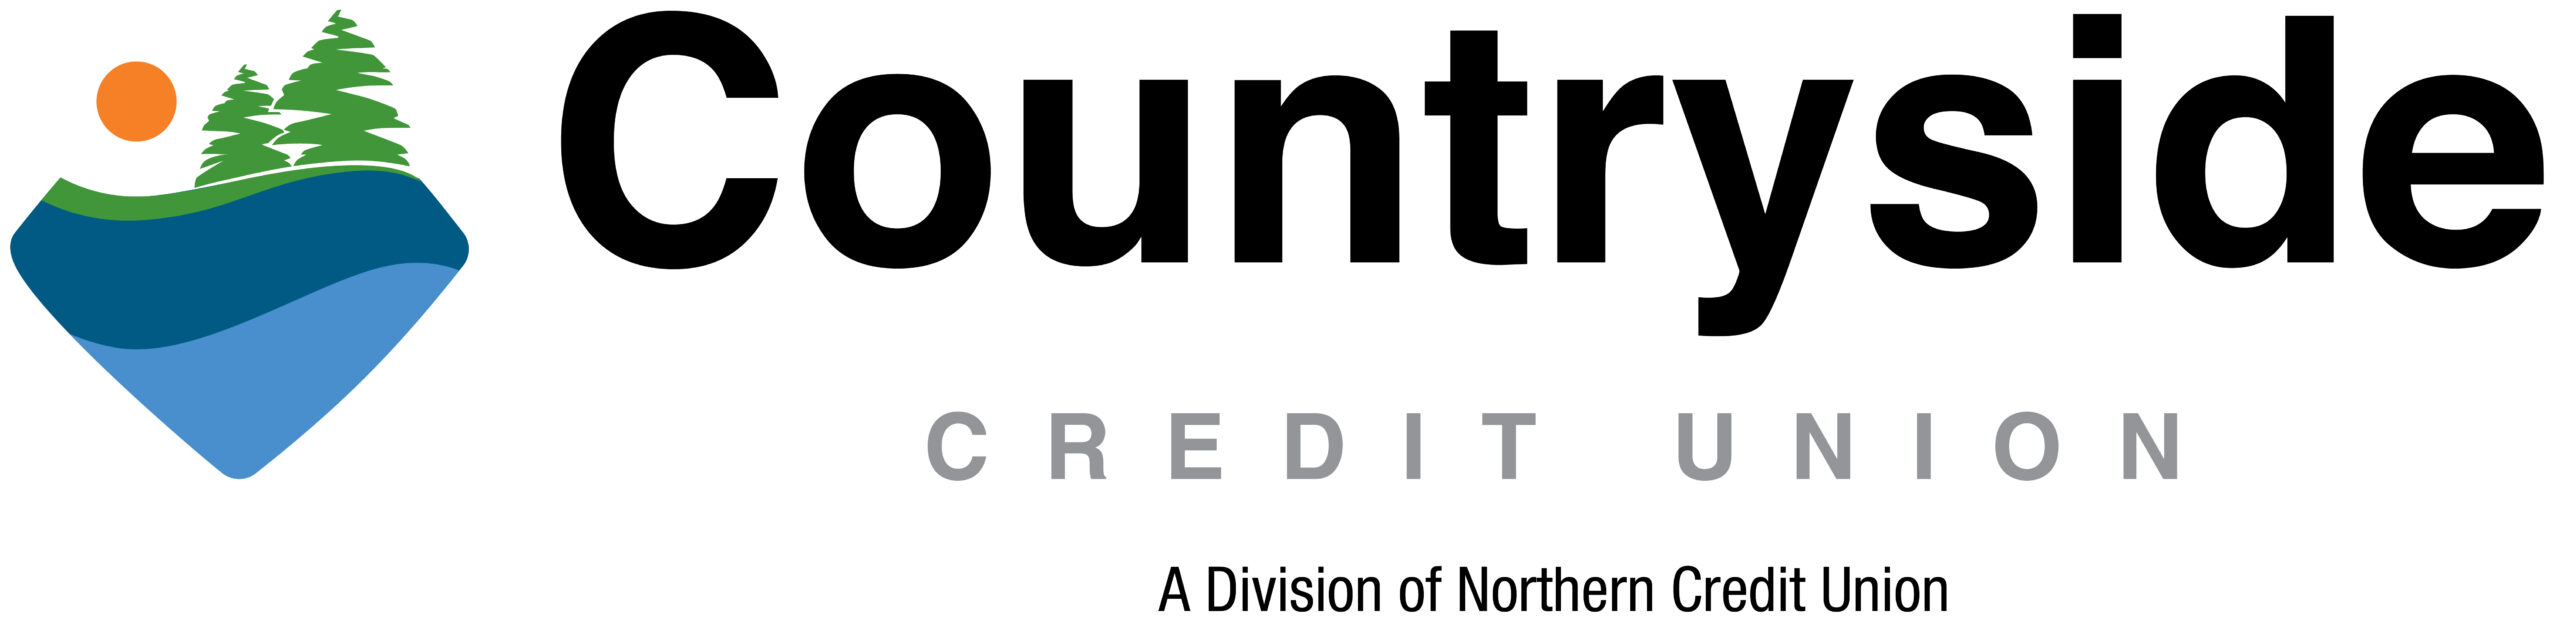 Countryside Credit Union logo